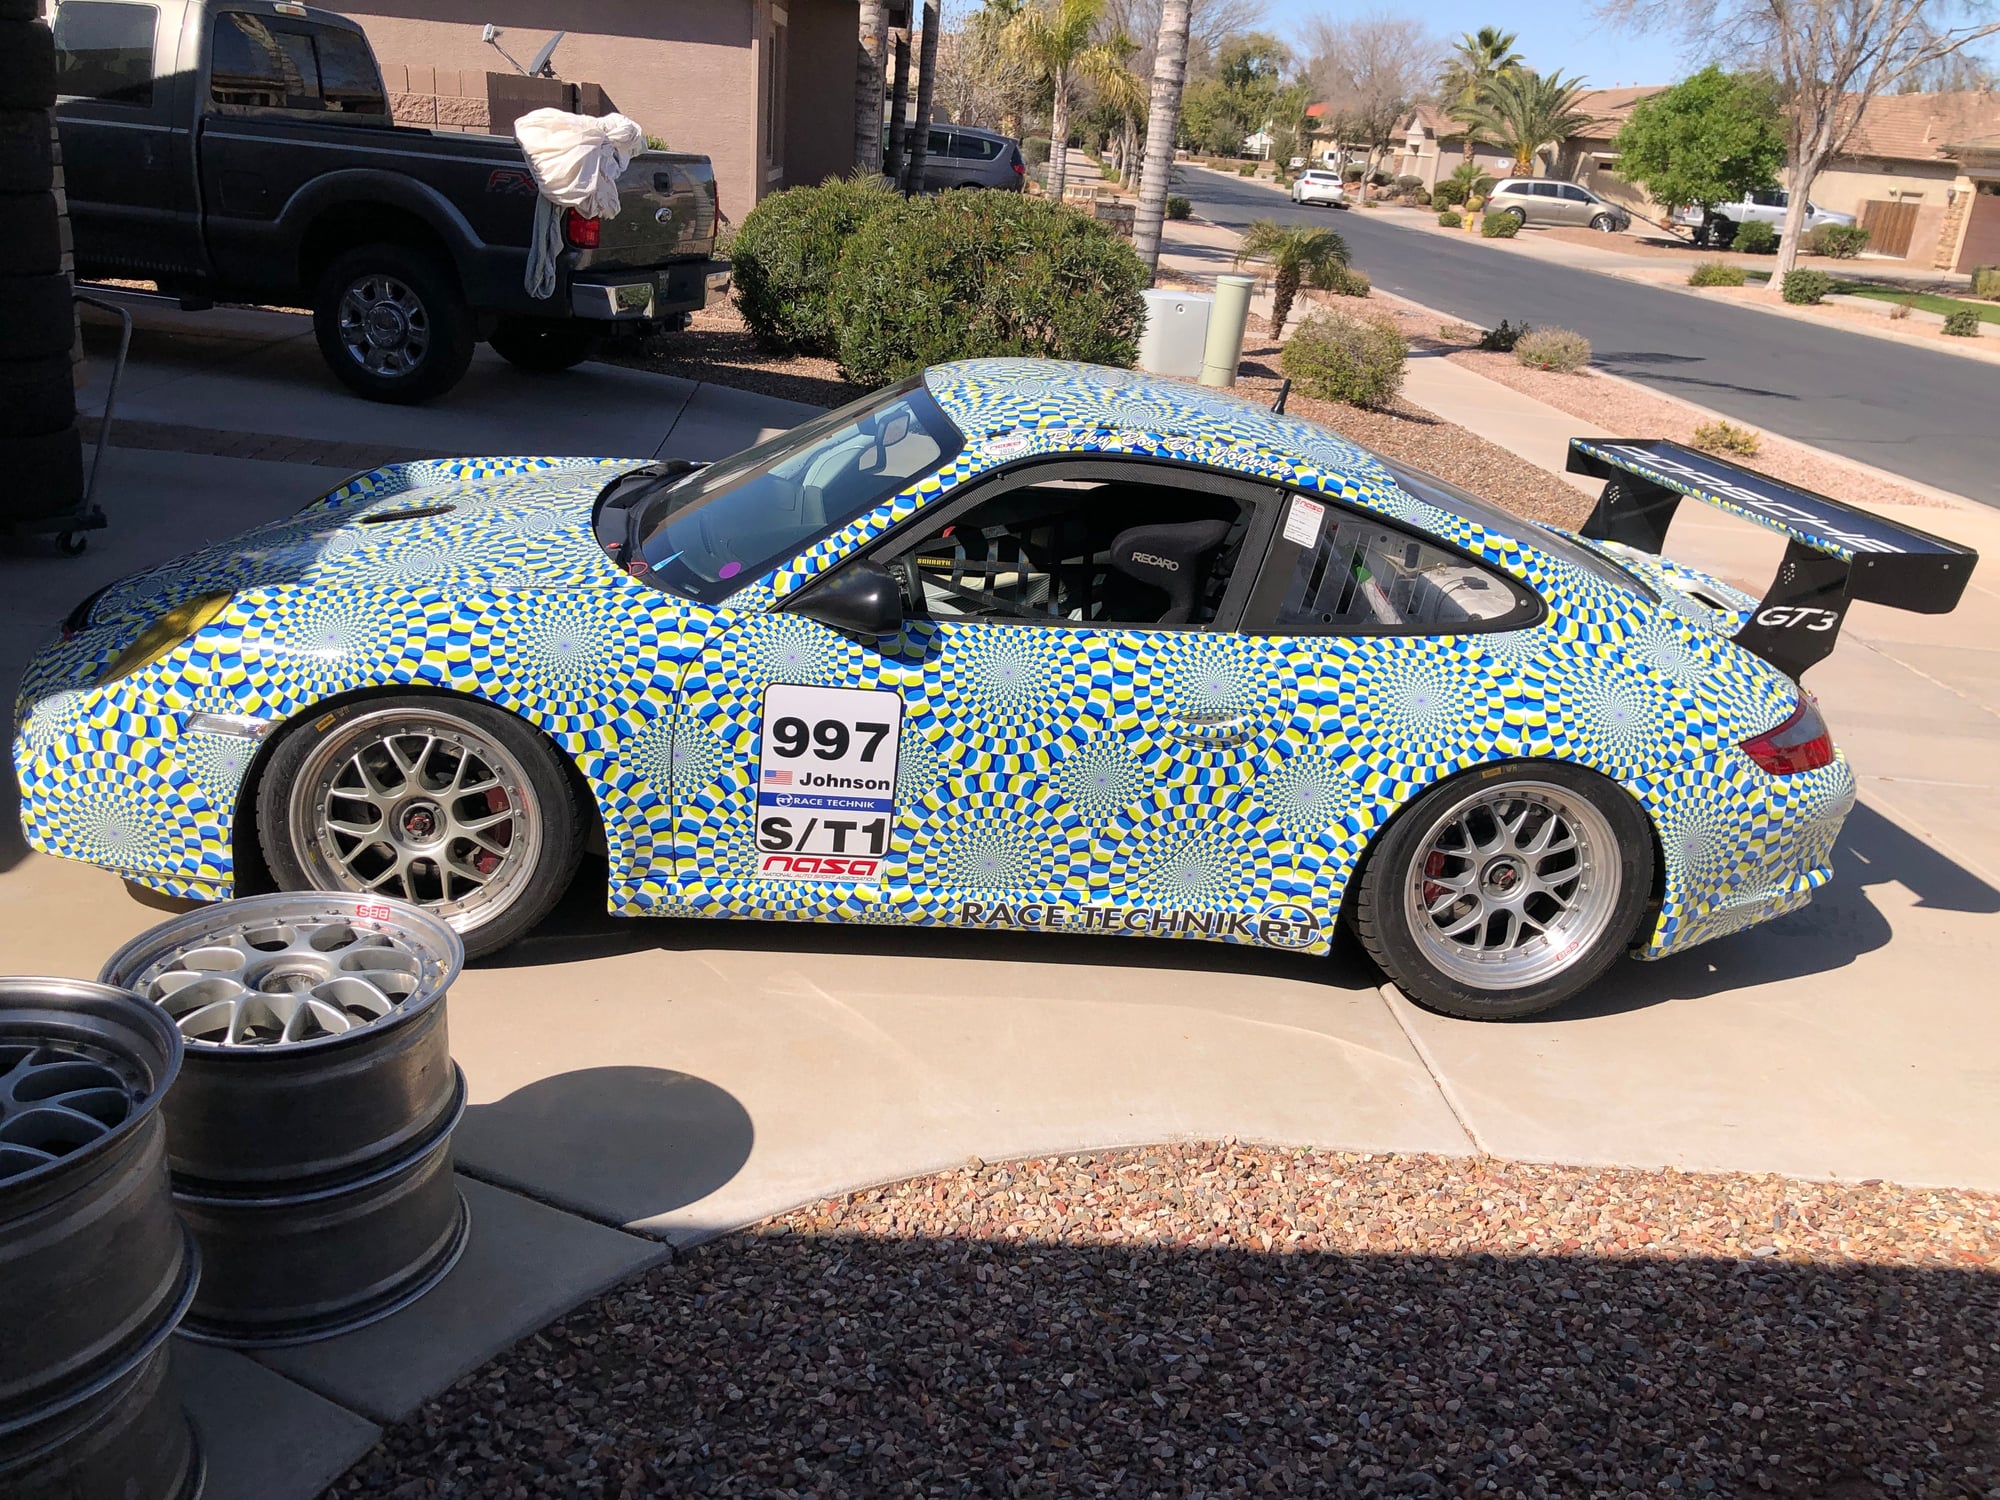 2009 Porsche GT3 - 2009 Porsche 997.1 GT3 Cup - with spares! - Used - VIN WPOZZZ99Z9S798198 - 6 cyl - 2WD - Automatic - Sedan - White - Phoenix, AZ 85142, United States